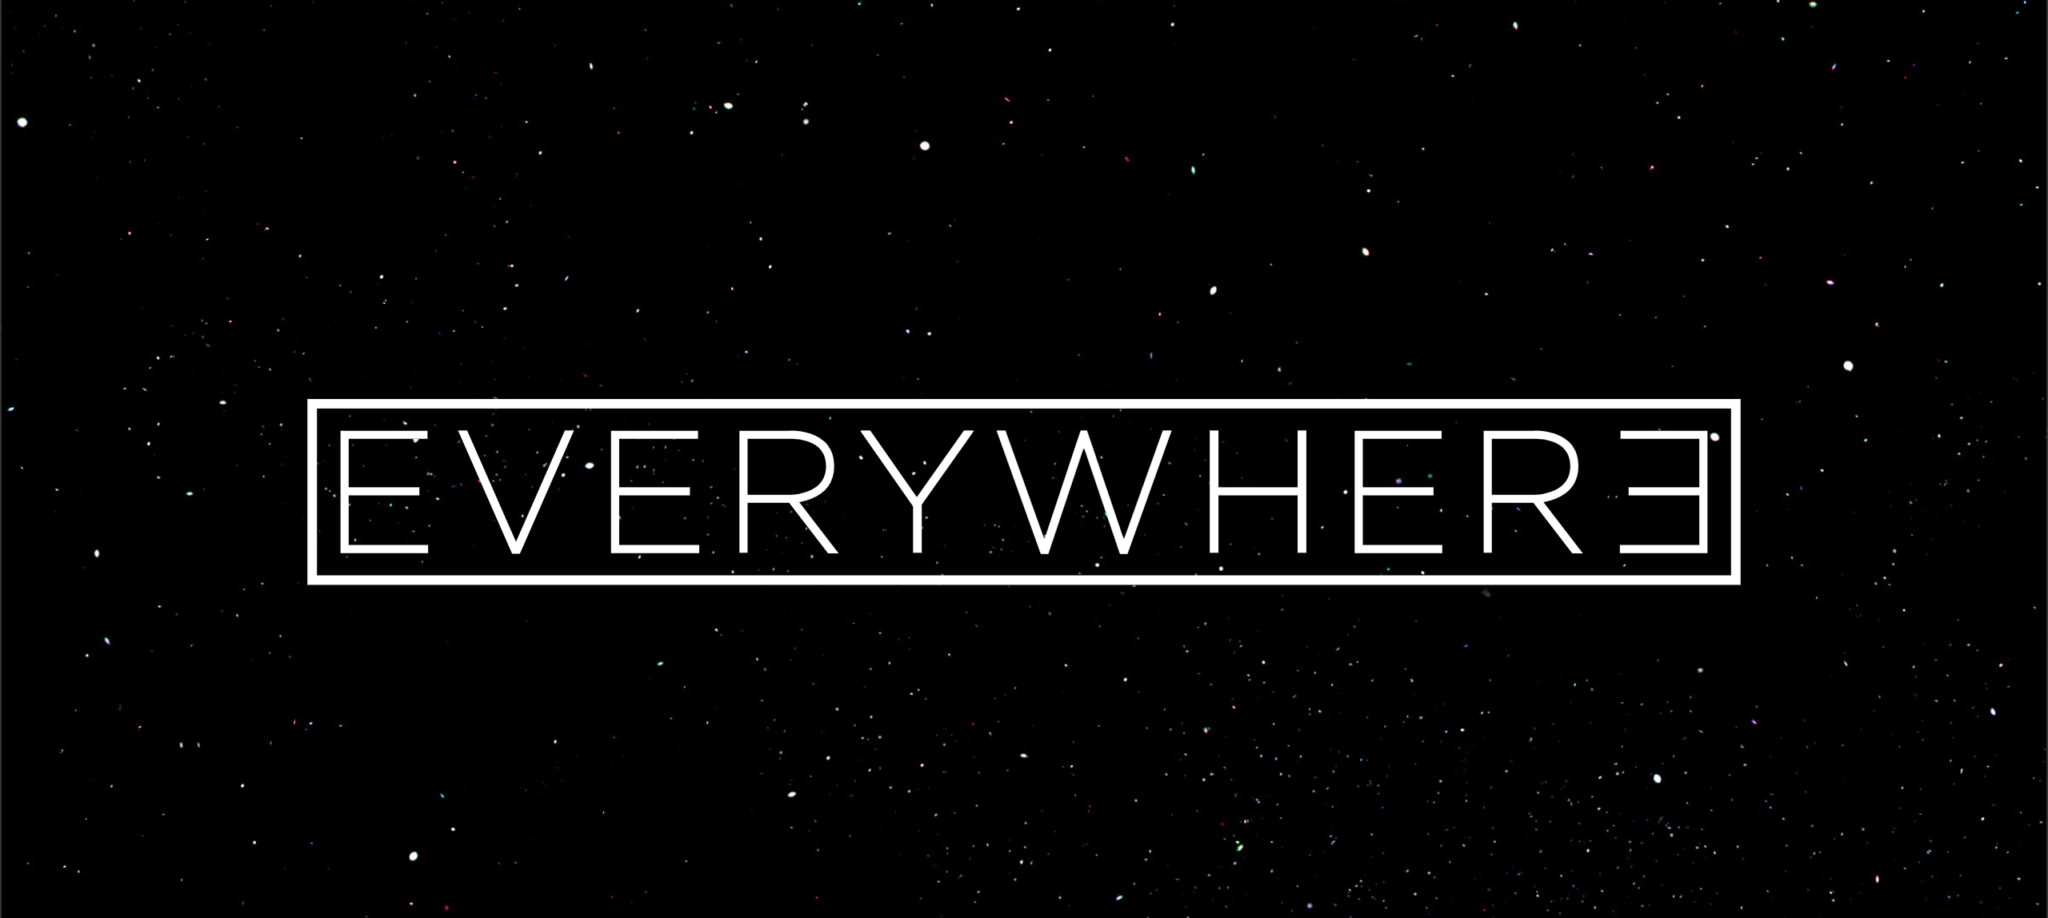 Everywhere video game logo